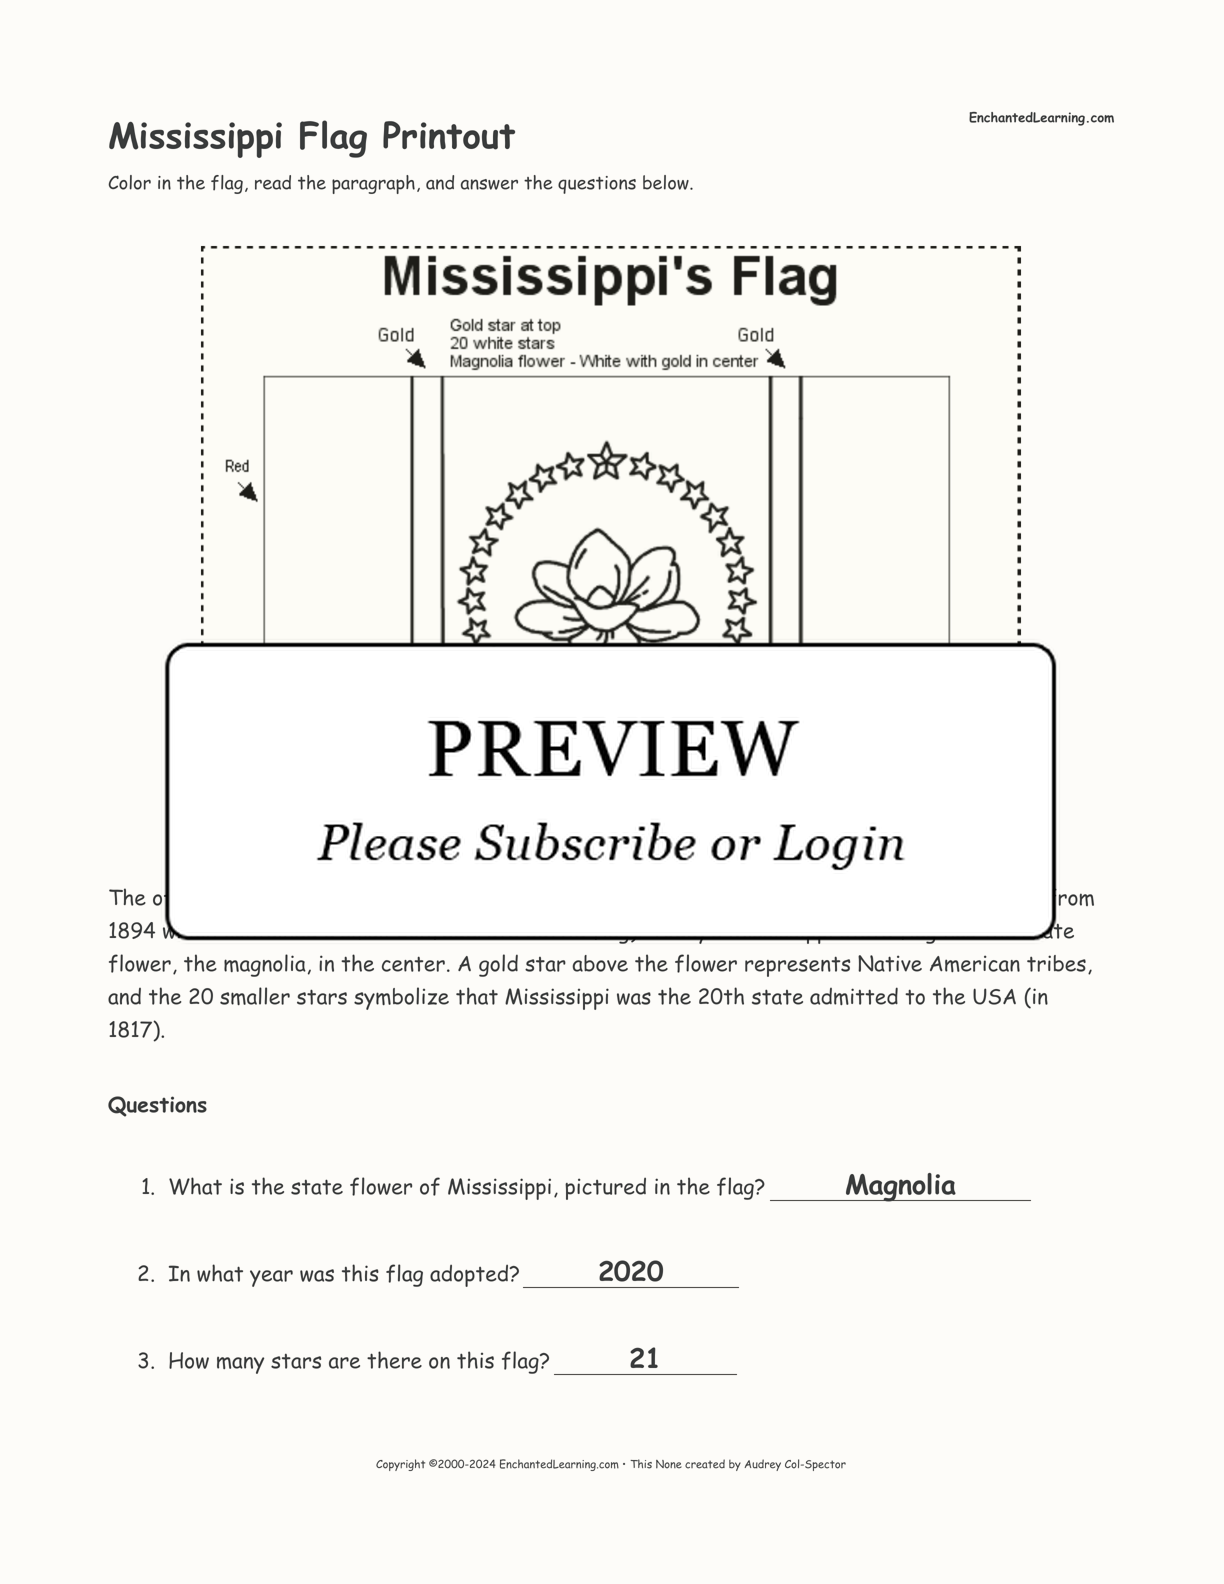 Mississippi Flag Printout interactive worksheet page 2